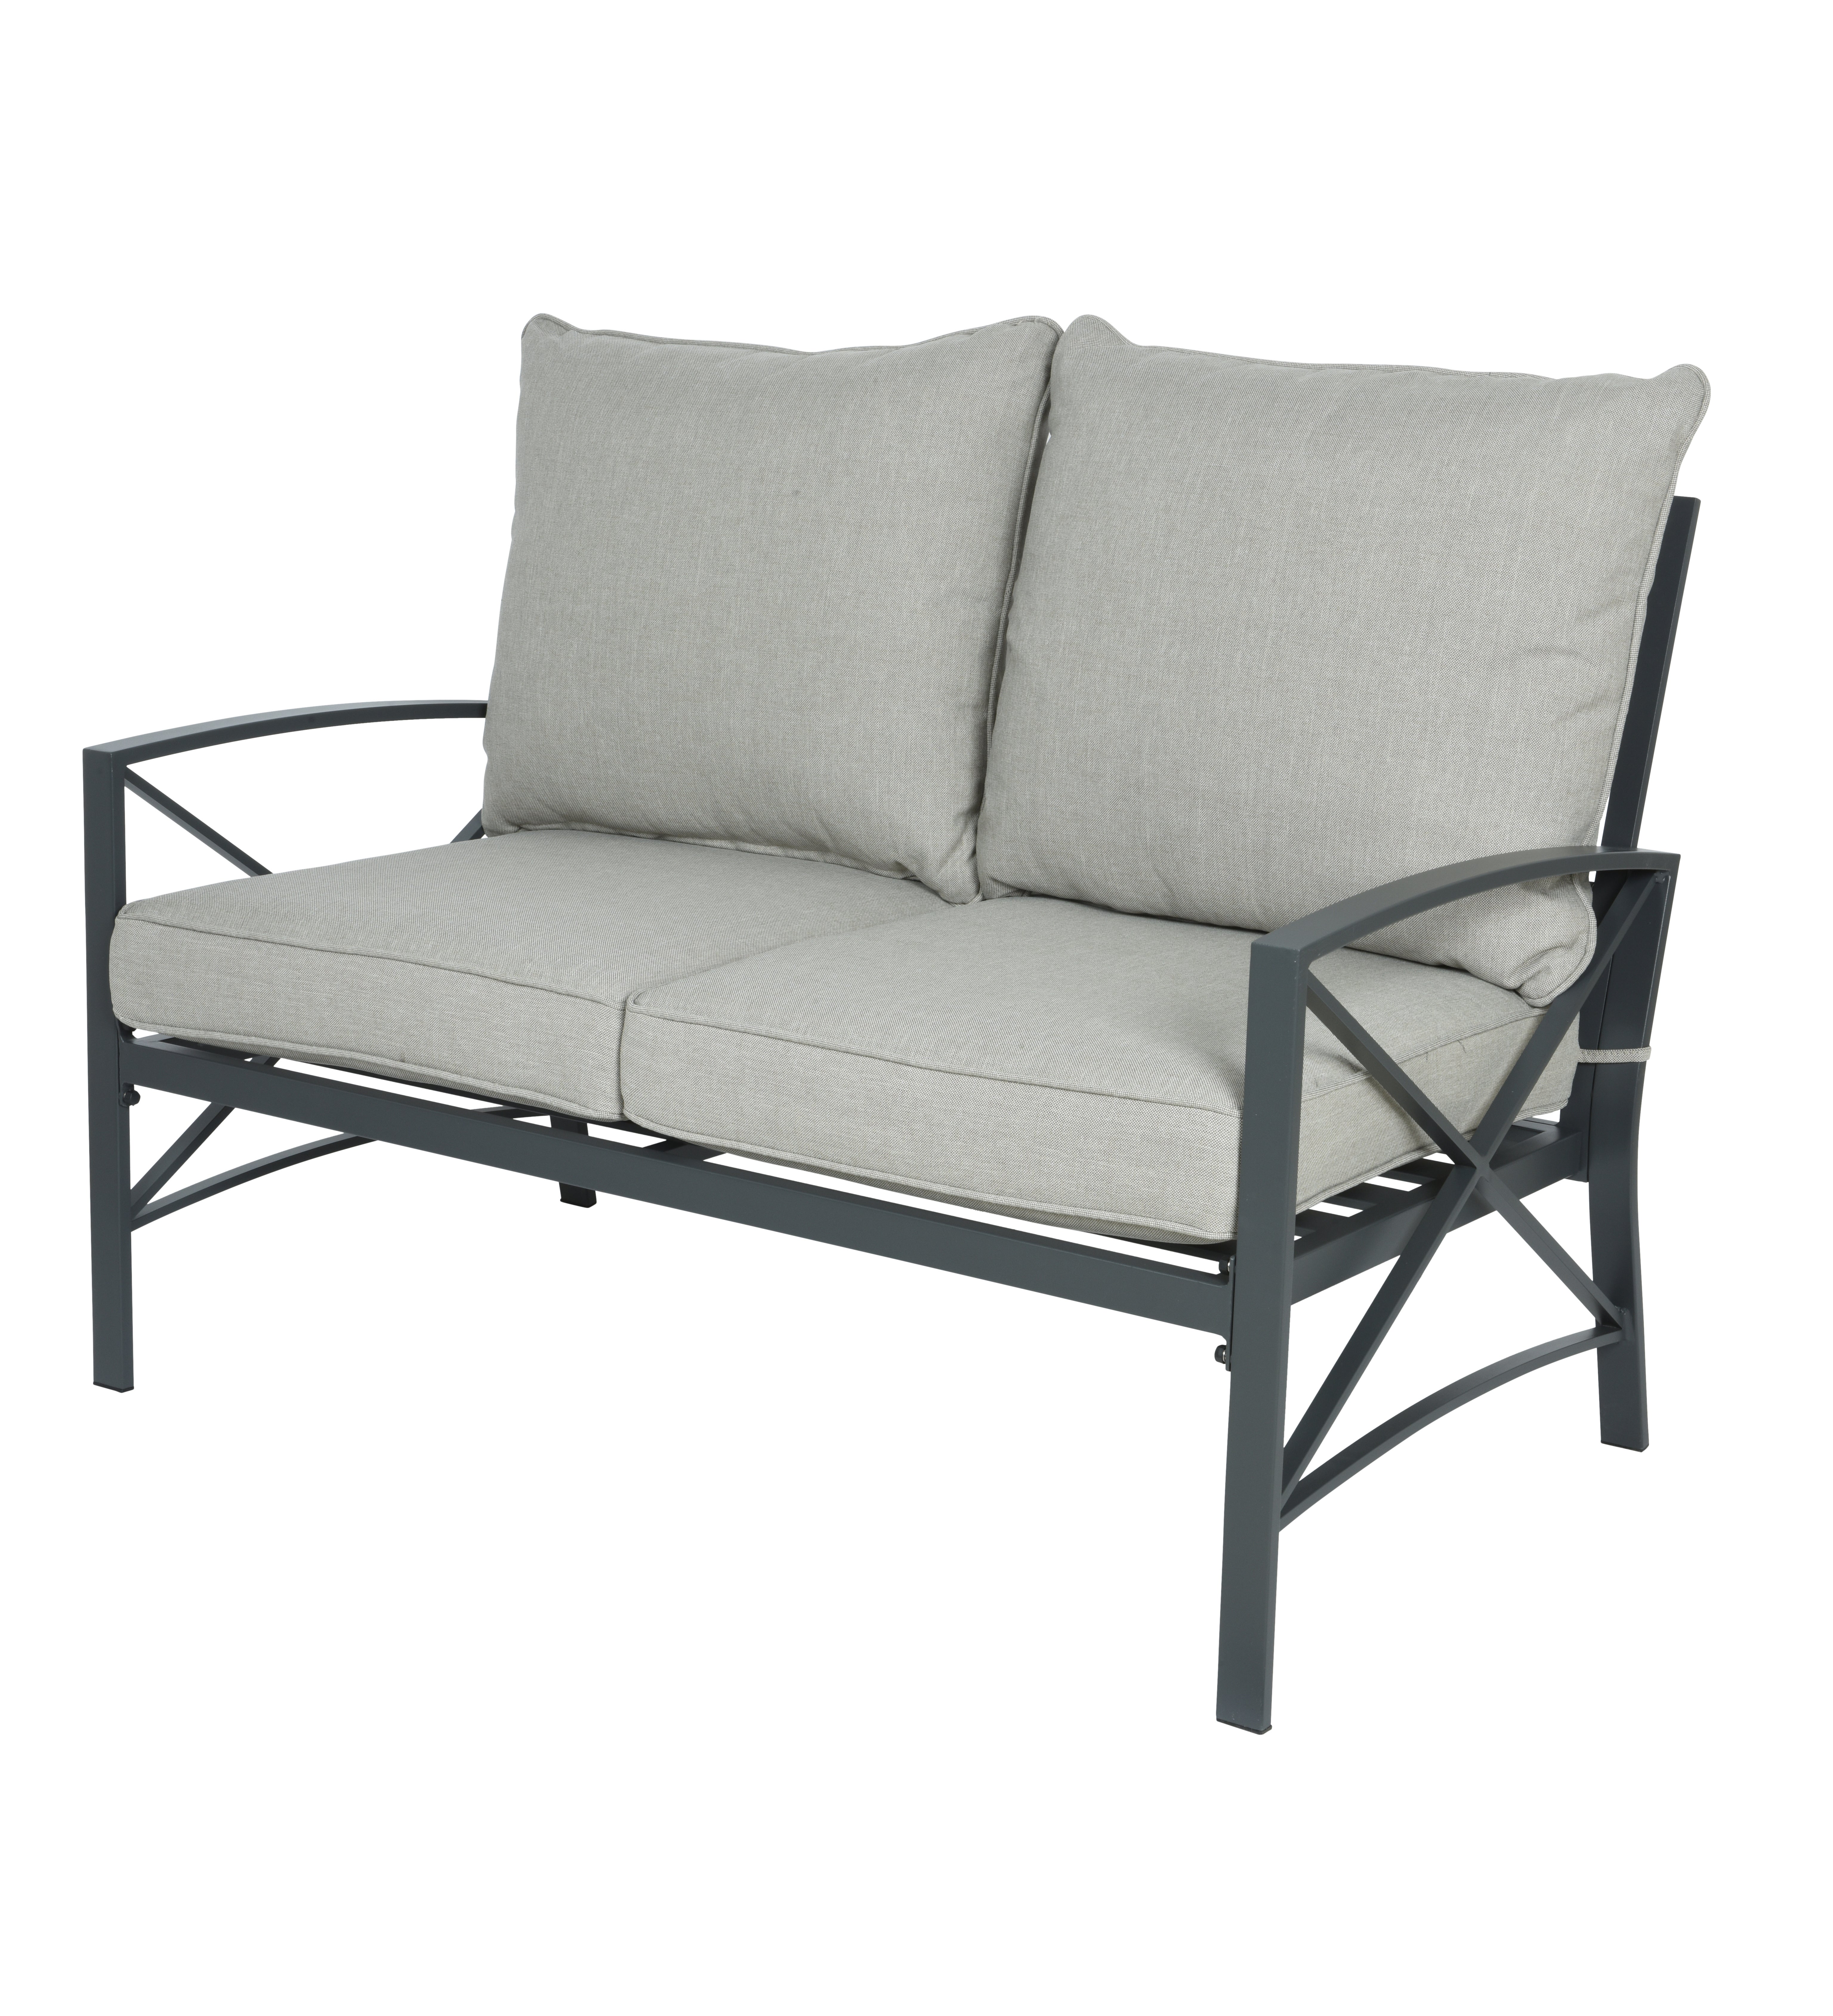 Arlington Cast Aluminum Outdoor Patio Seating with Cushions, 4-Piece Set